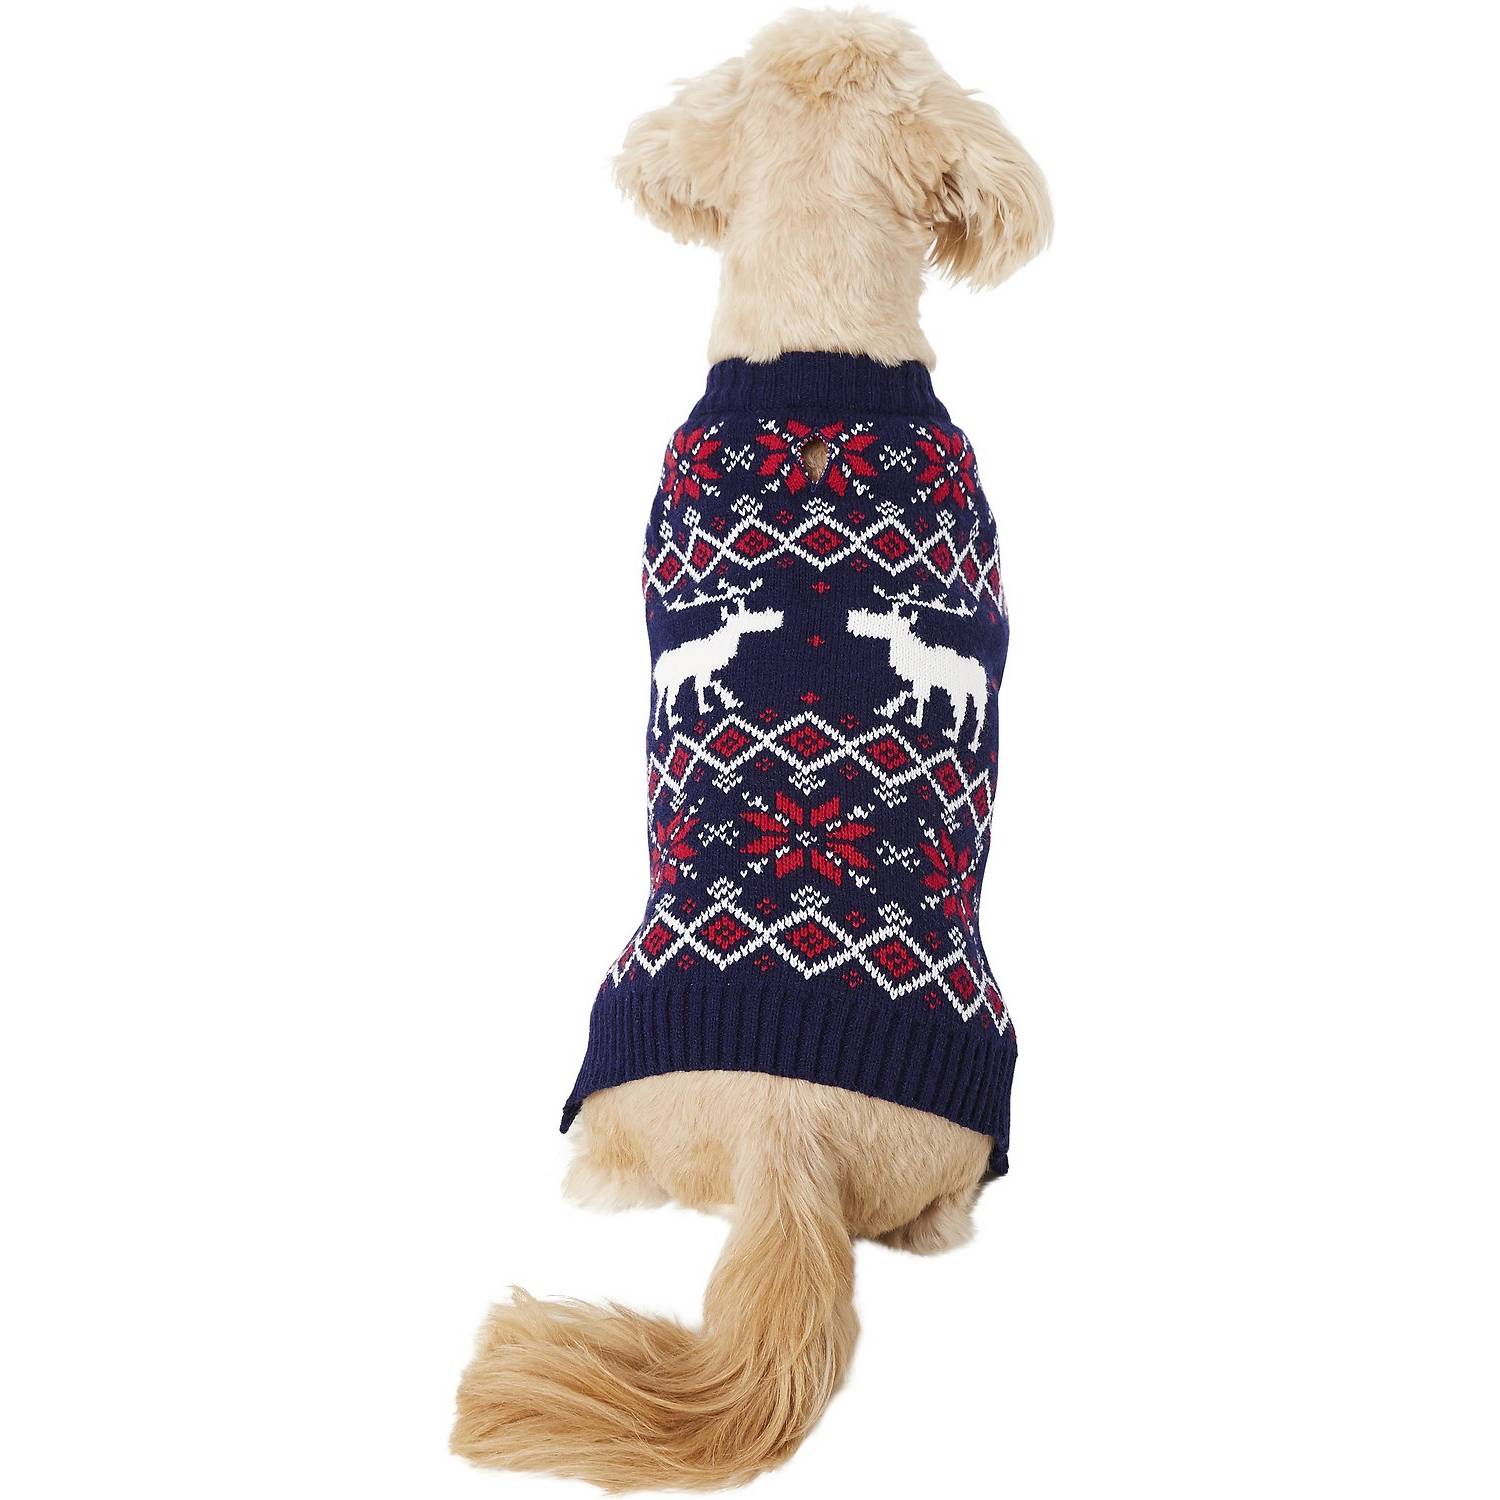 Frisco Moose Fair Isle Dog & Cat Sweater (1)